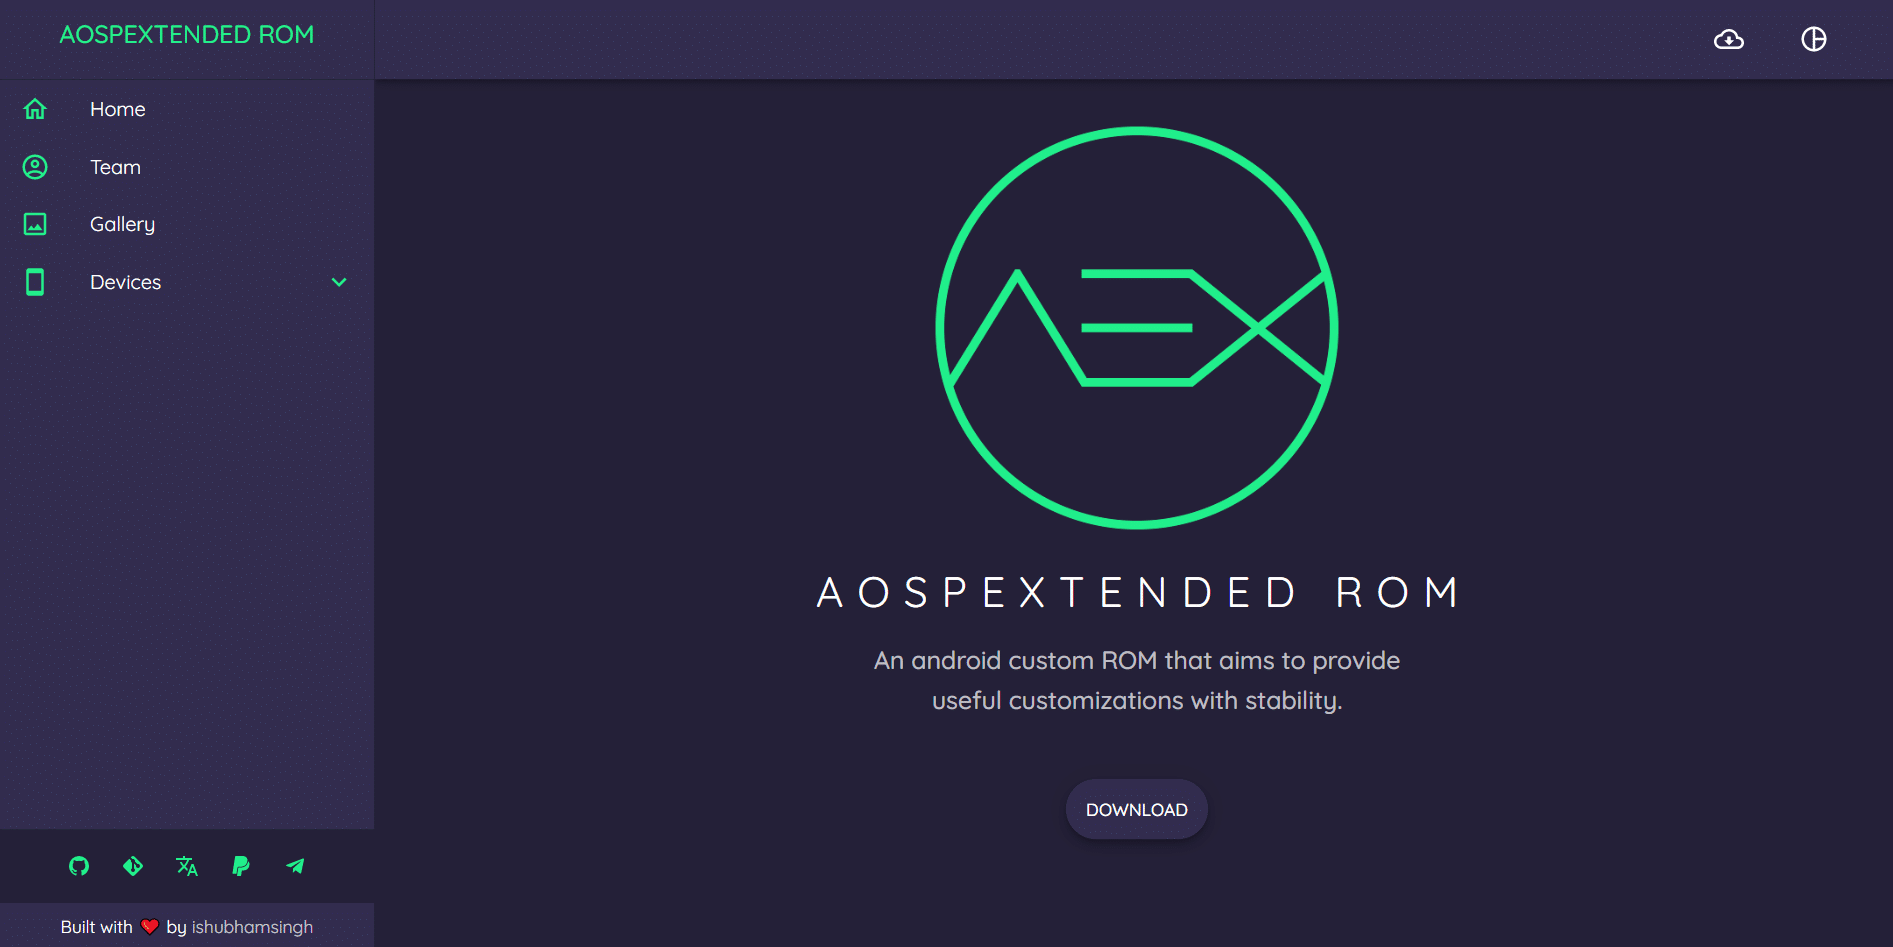 AOSP Extended